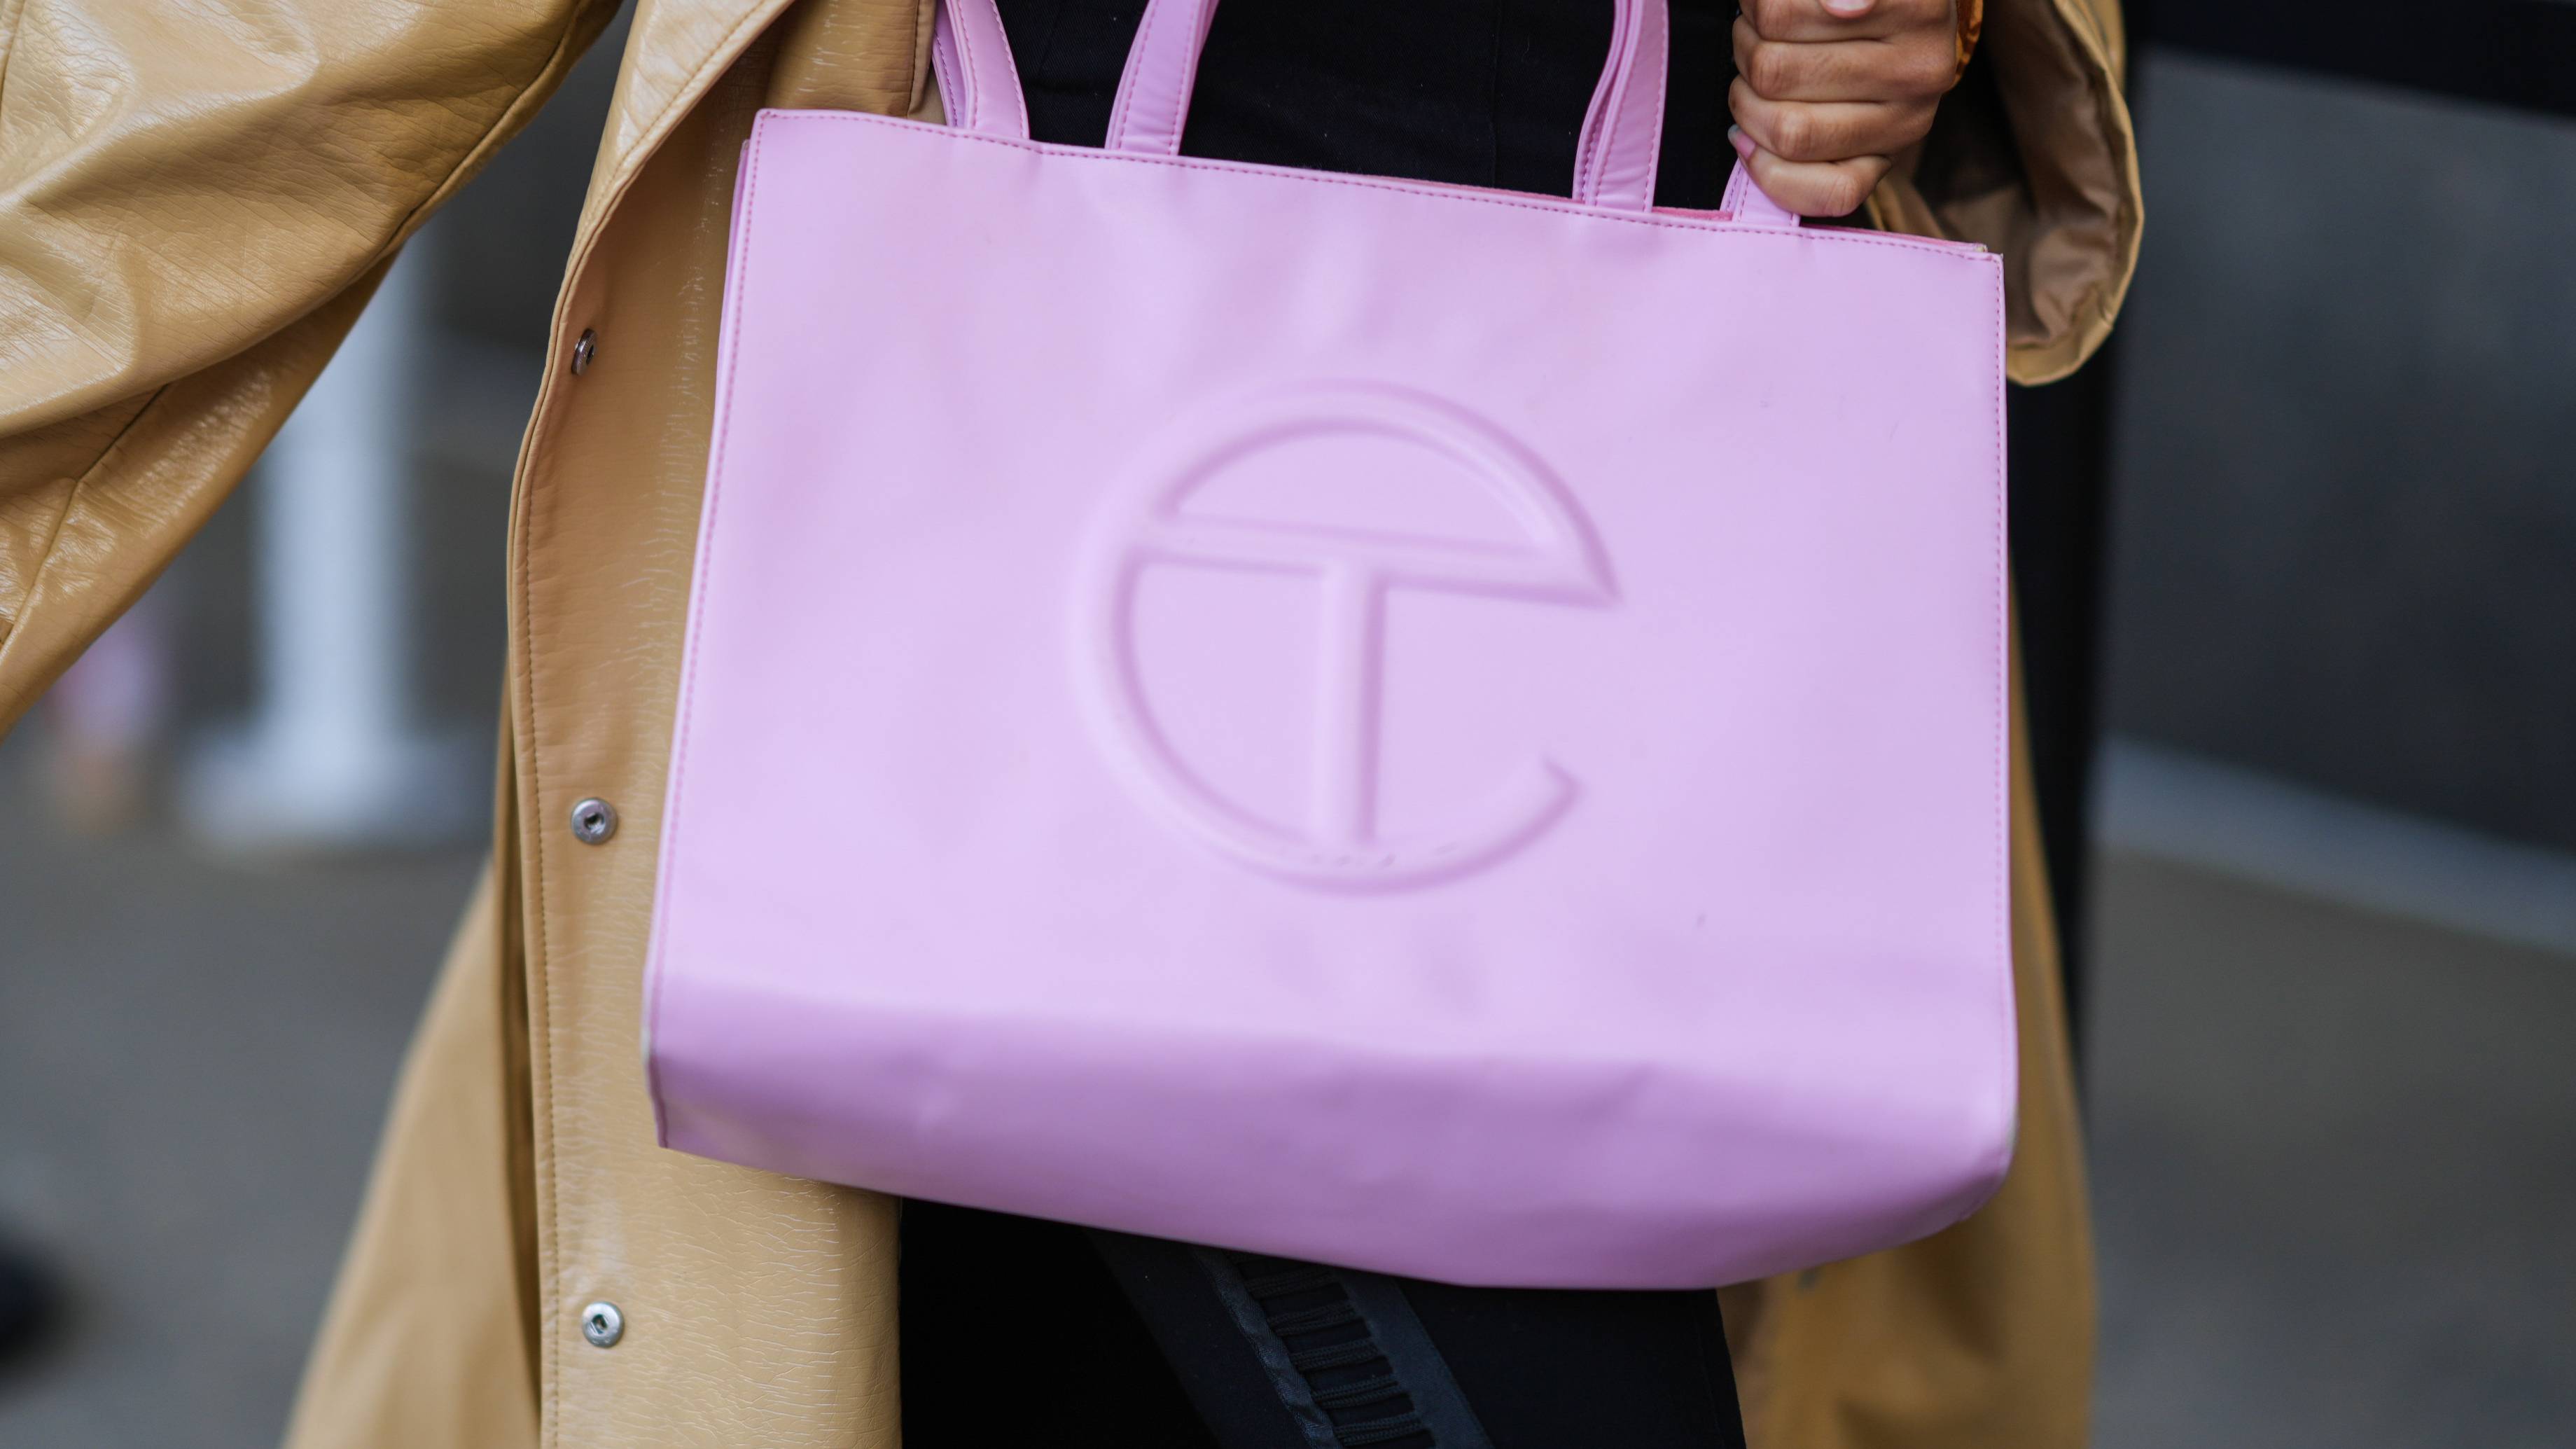 New Telfar bag's price leaves internet frustrated